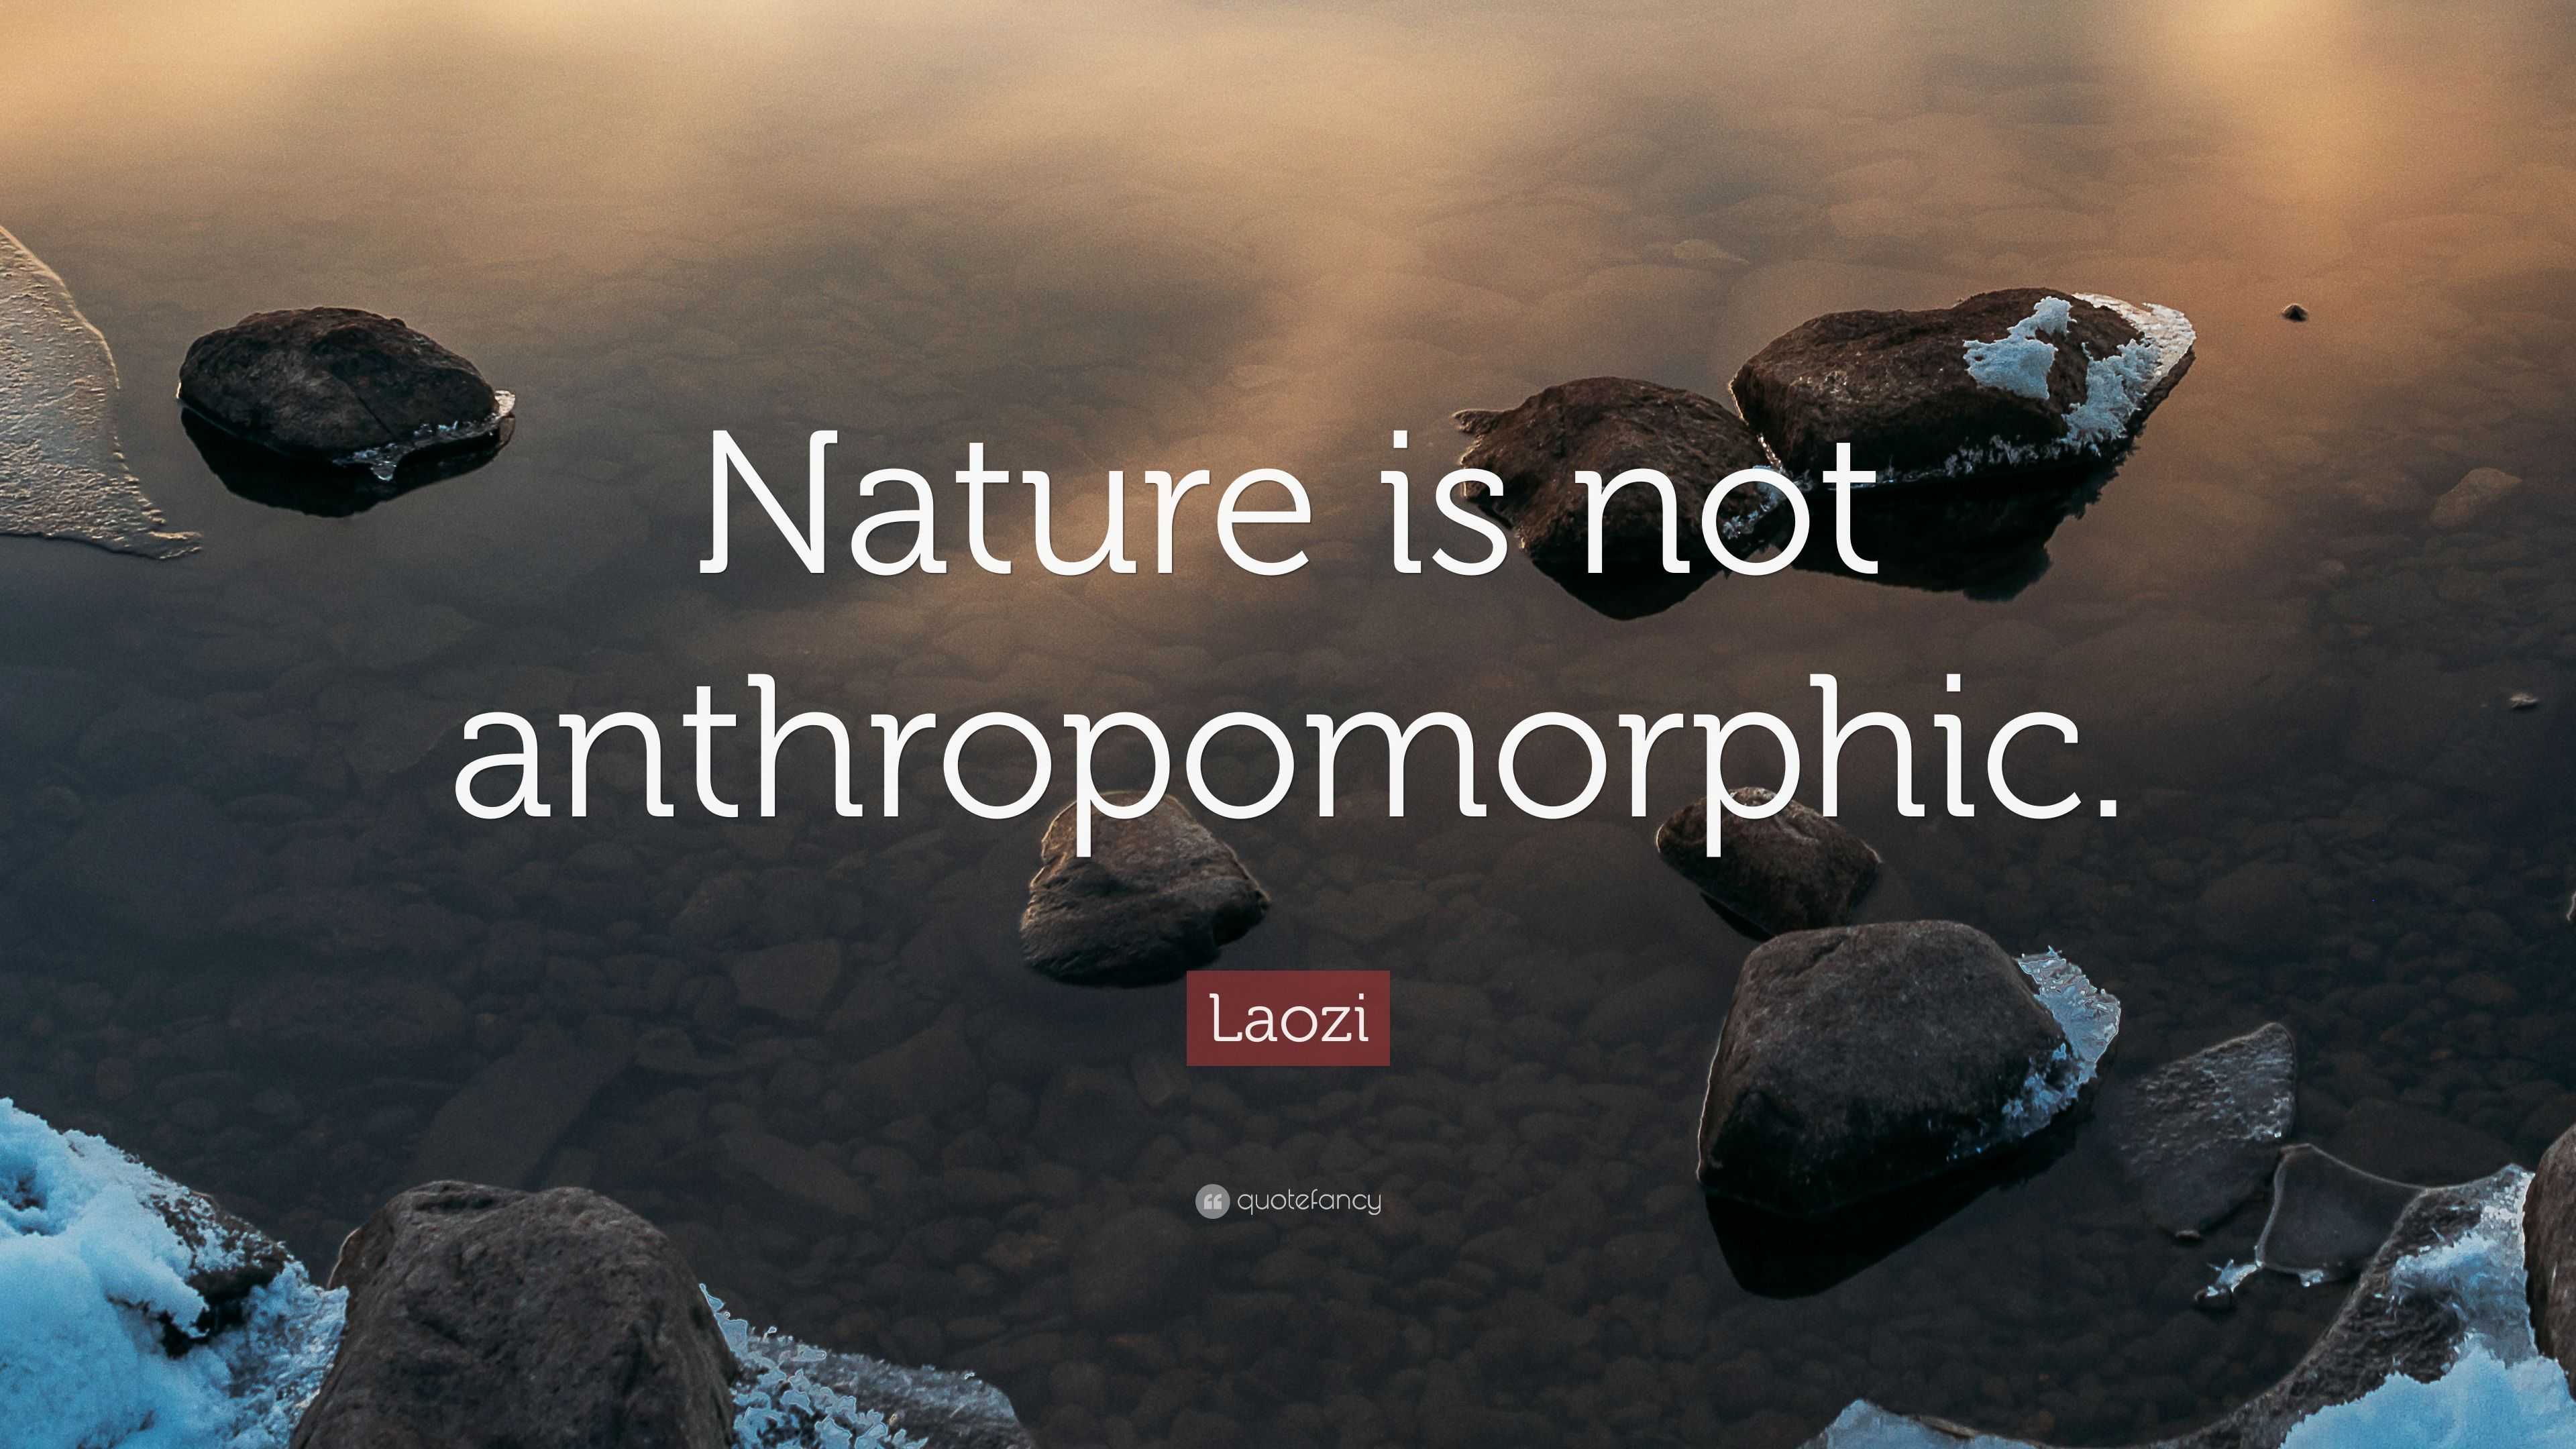 Laozi Quote: is not anthropomorphic.”